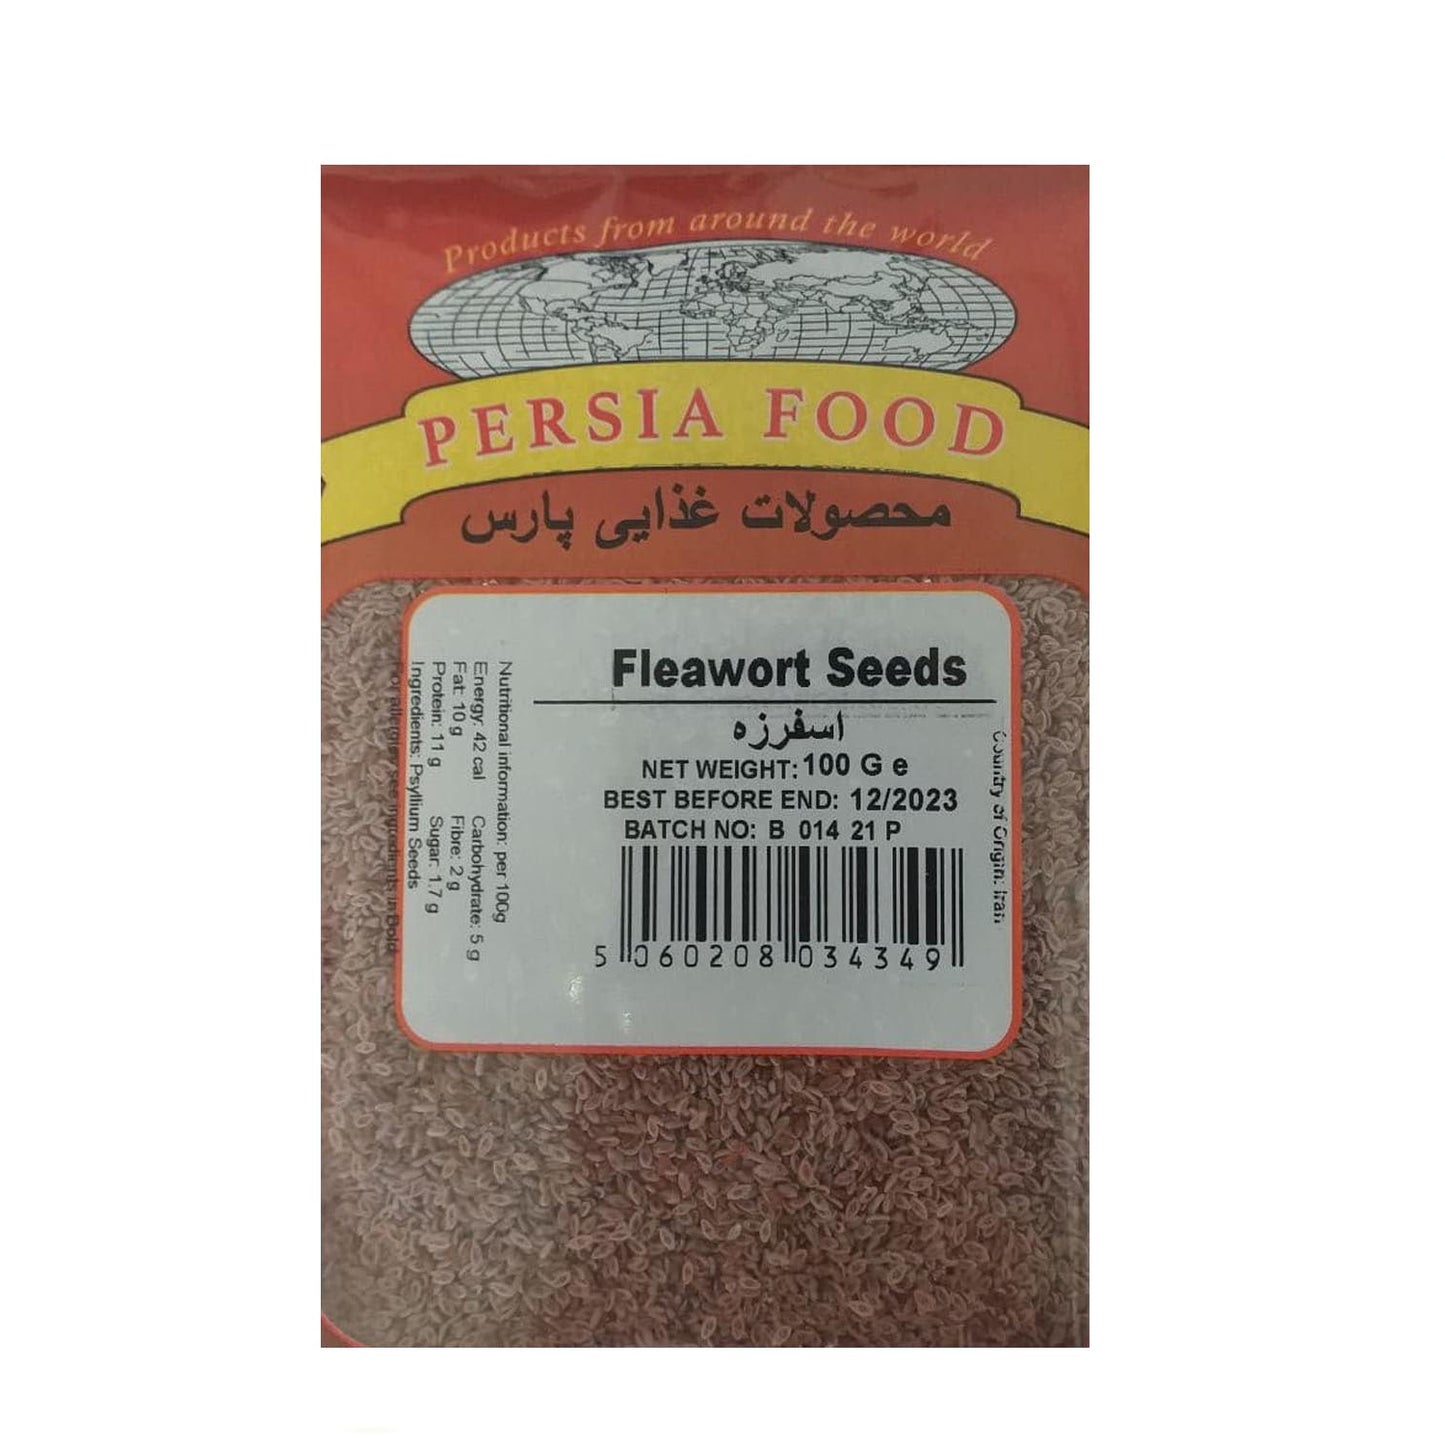 Persia Food Fleawort Seeds 100g